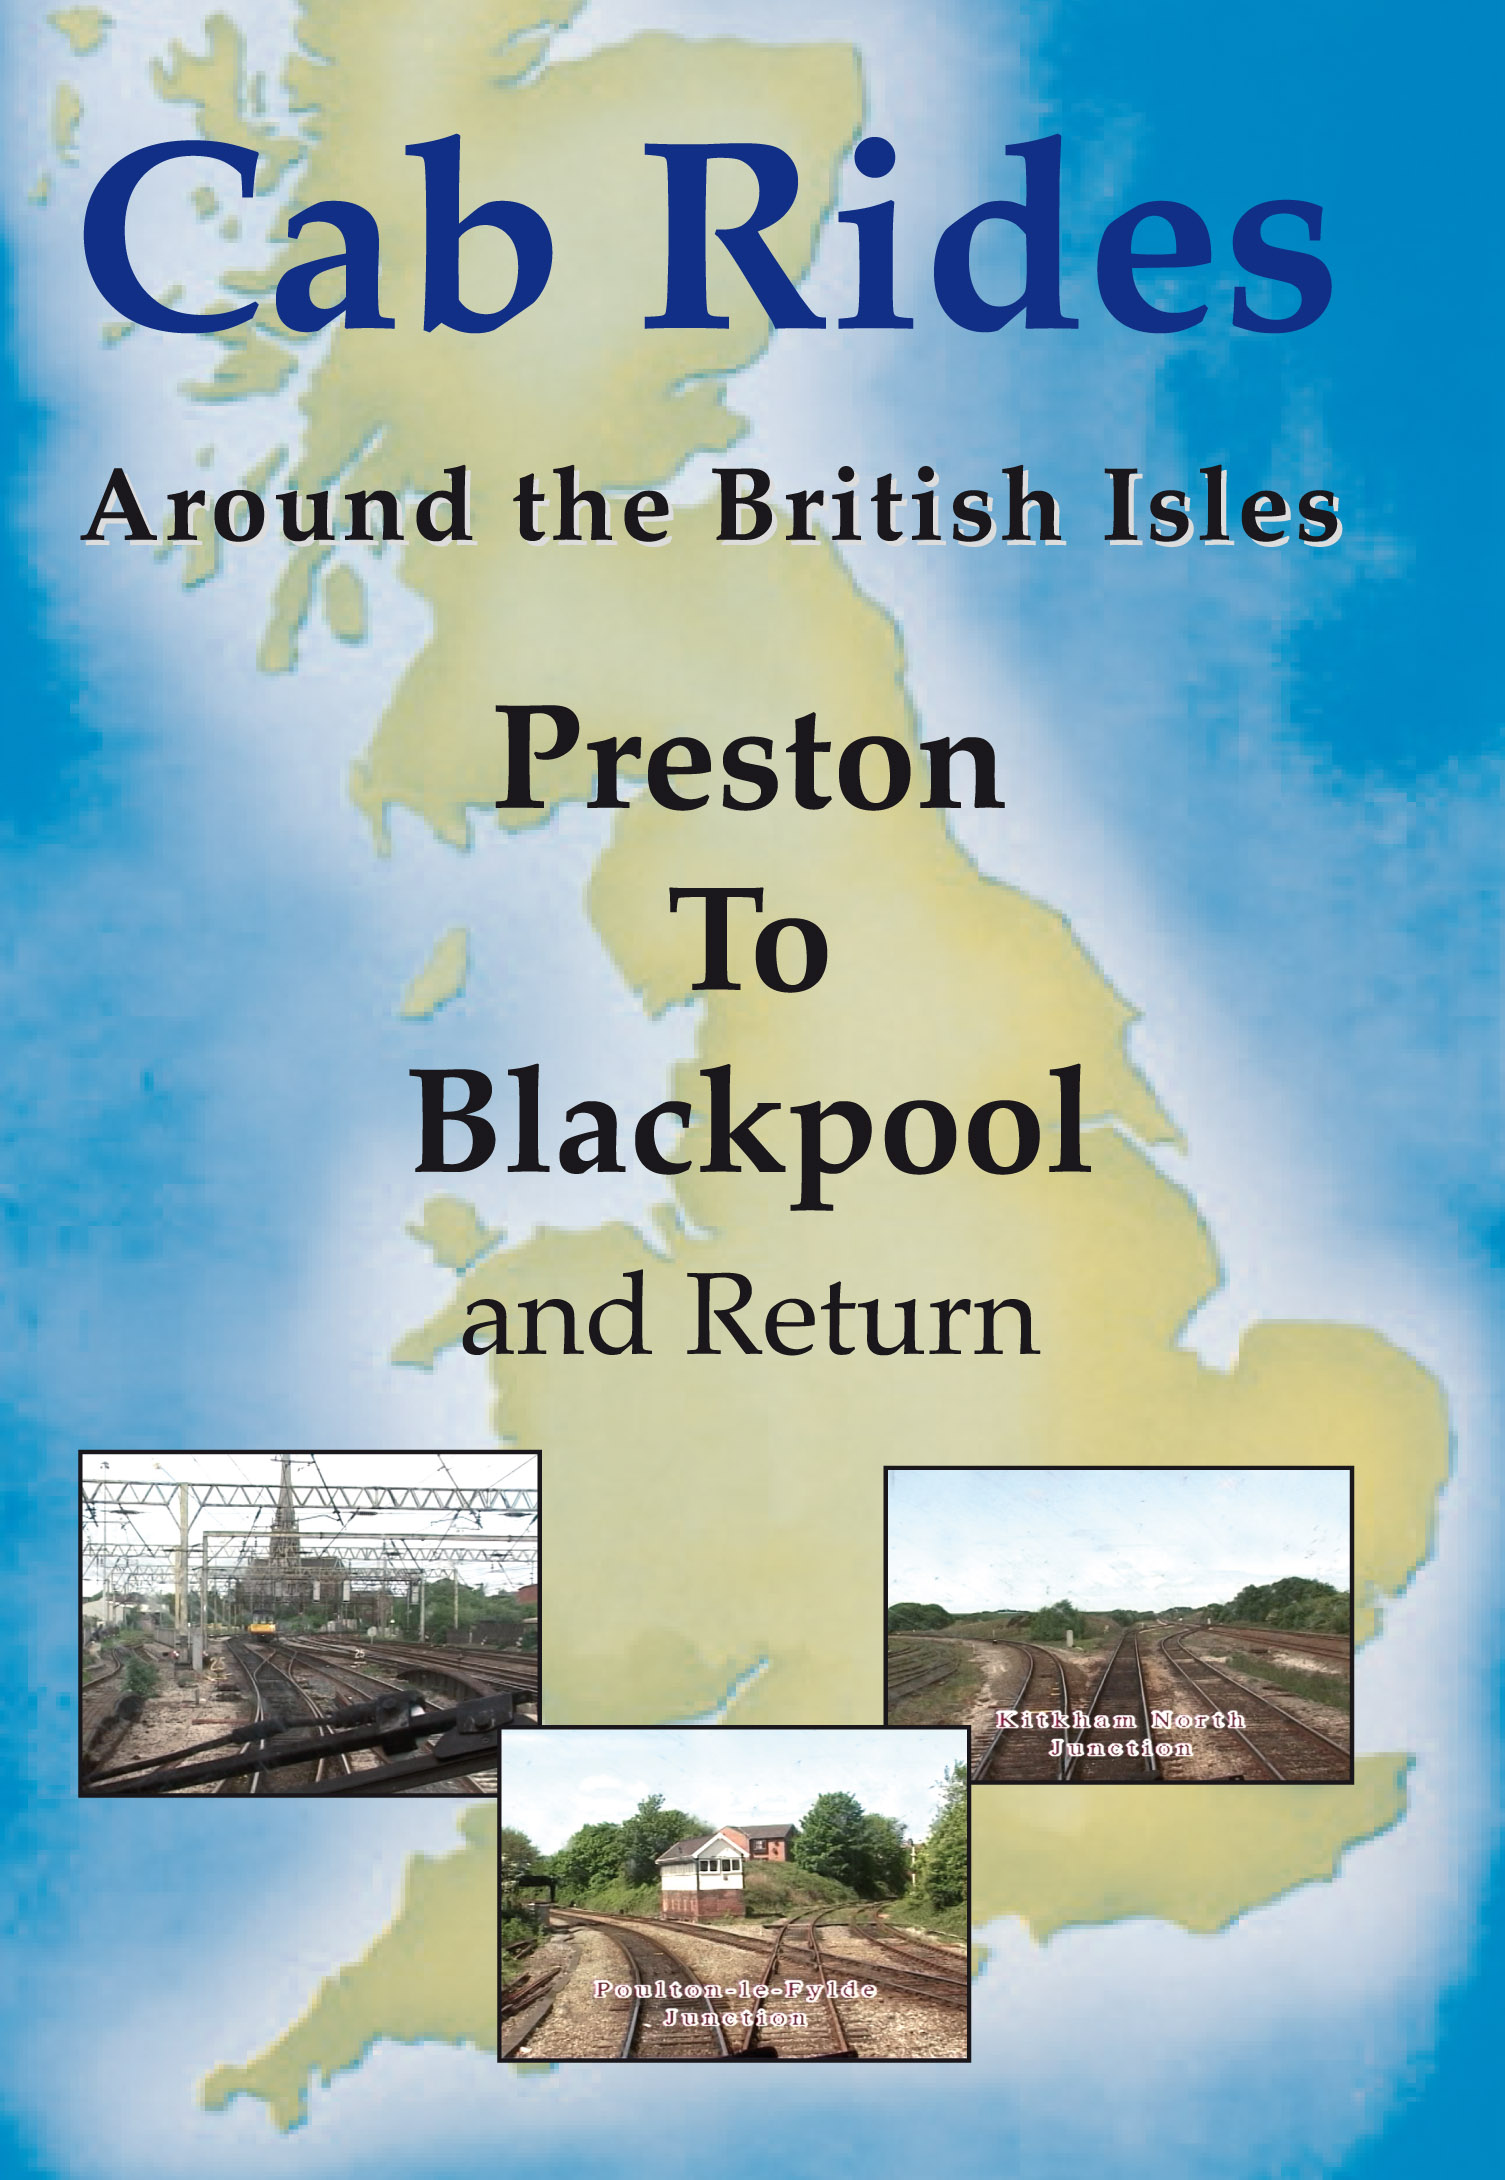 Cab Rides Around the British Isles: Preston to Blackpool and Return in 2003